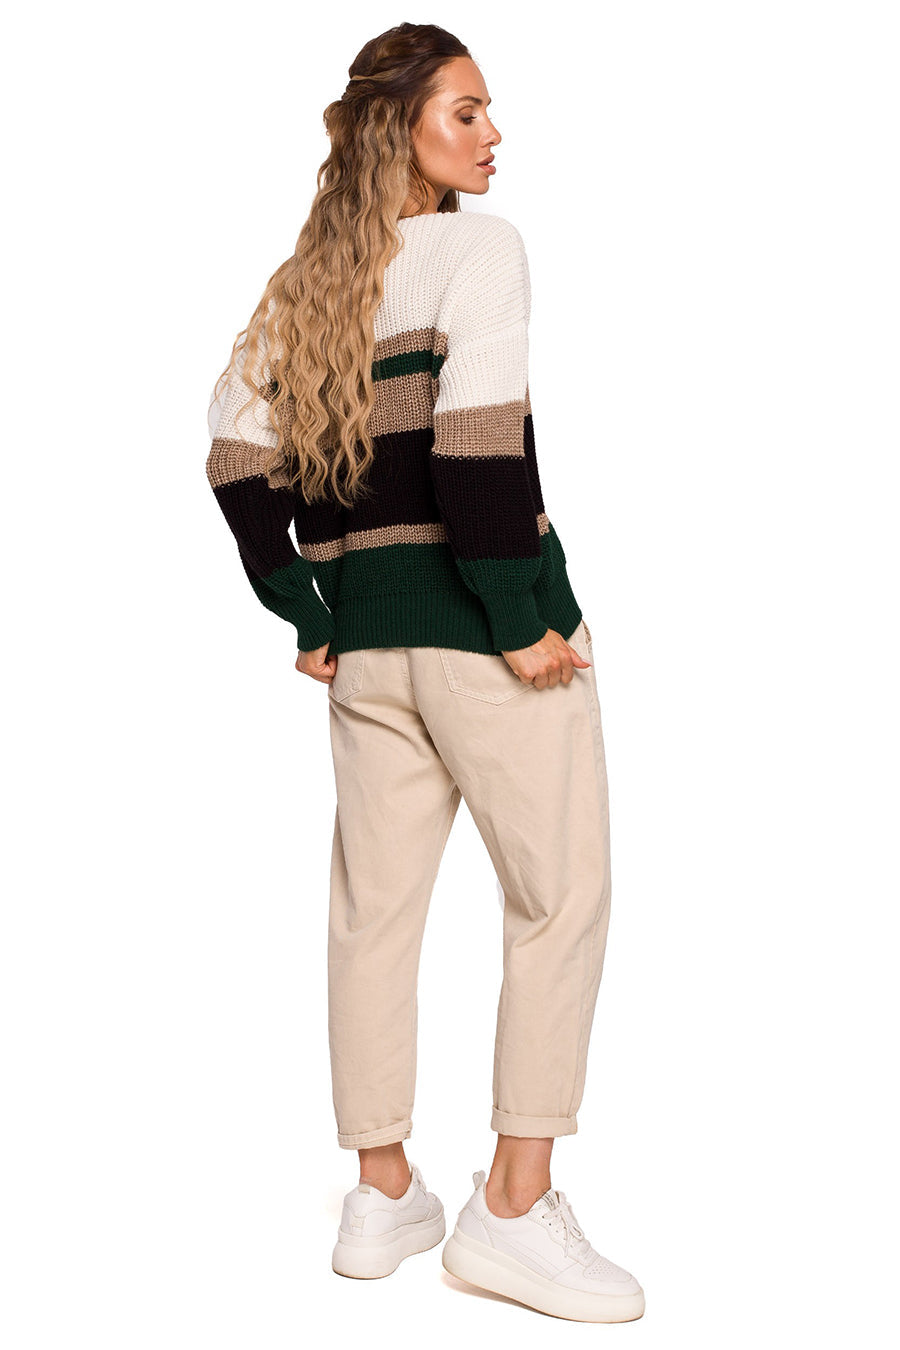 Дамски пуловер Aithne, Бял/Зелен 3